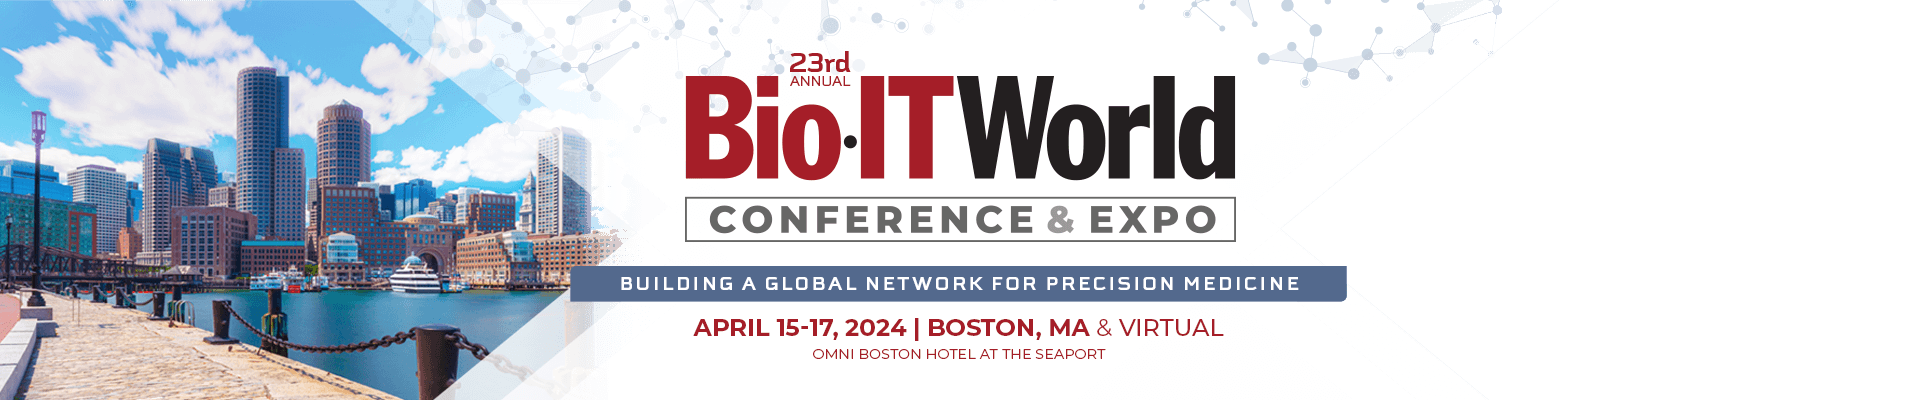 Bio-IT Conference & Expo 2024, Boston, Massachusetts, United States